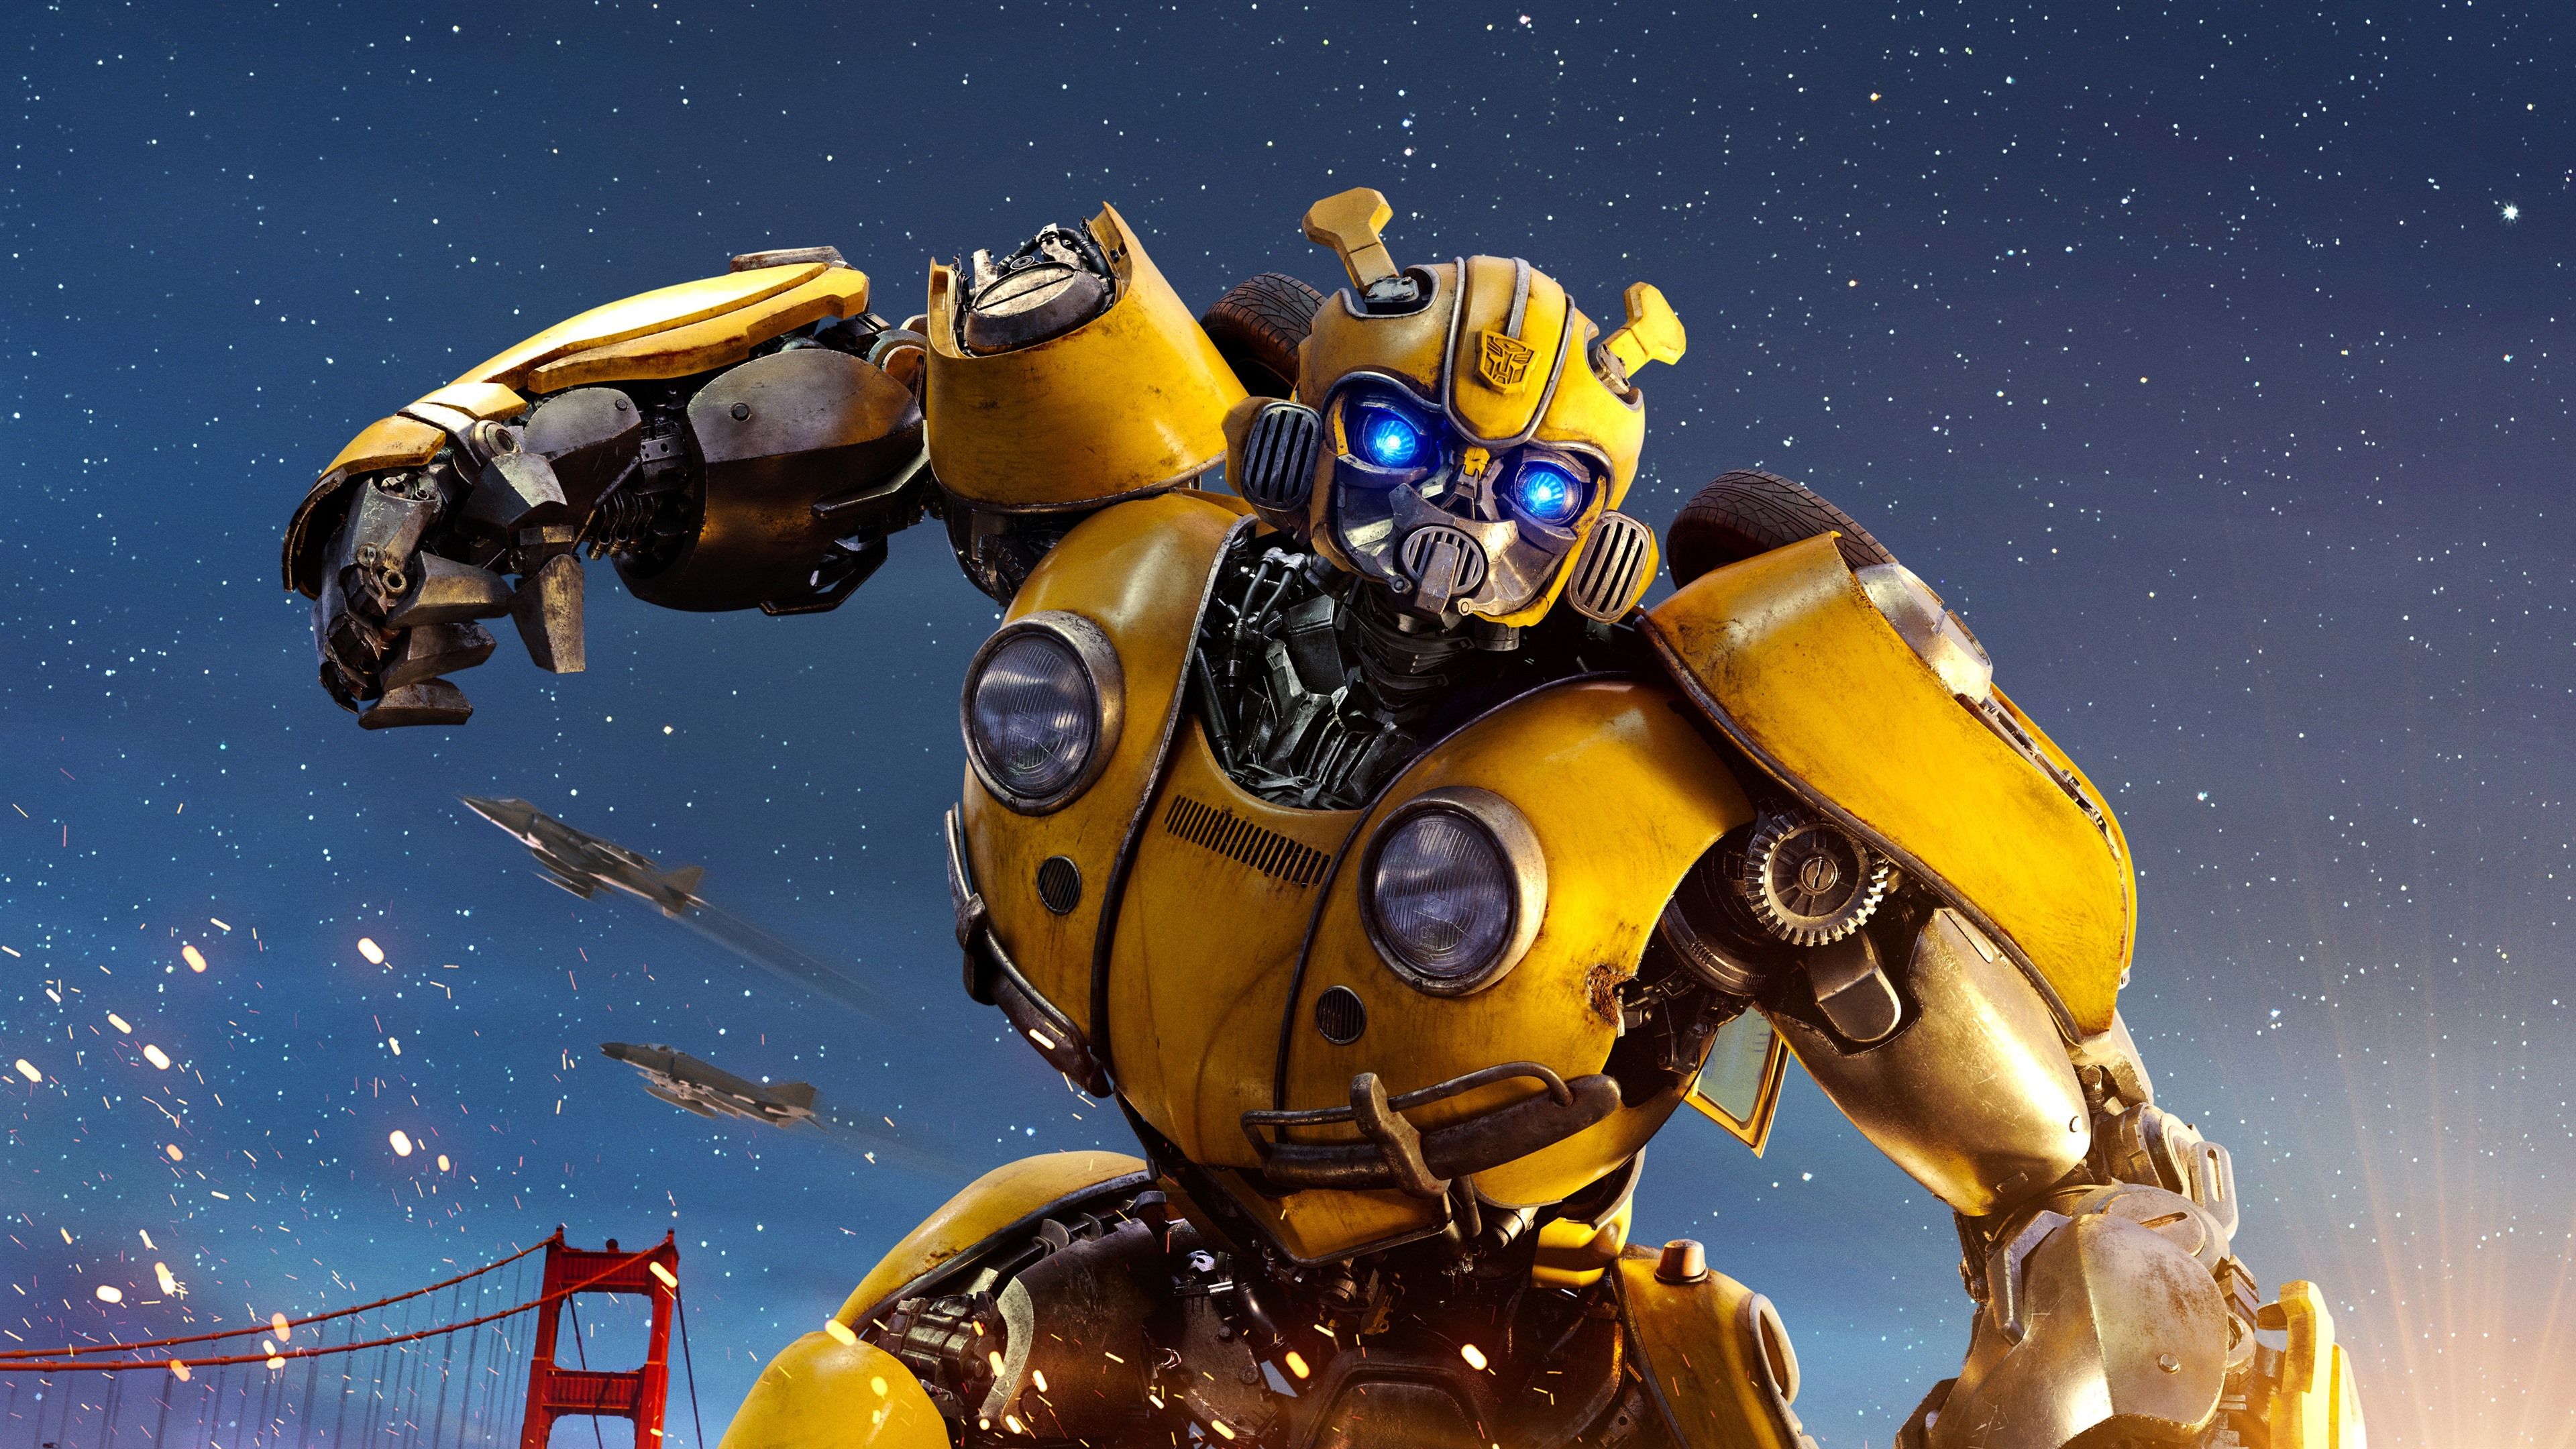 Wallpaper Transformers, Bumblebee, robot 3840x2160 UHD 4K Picture, Image